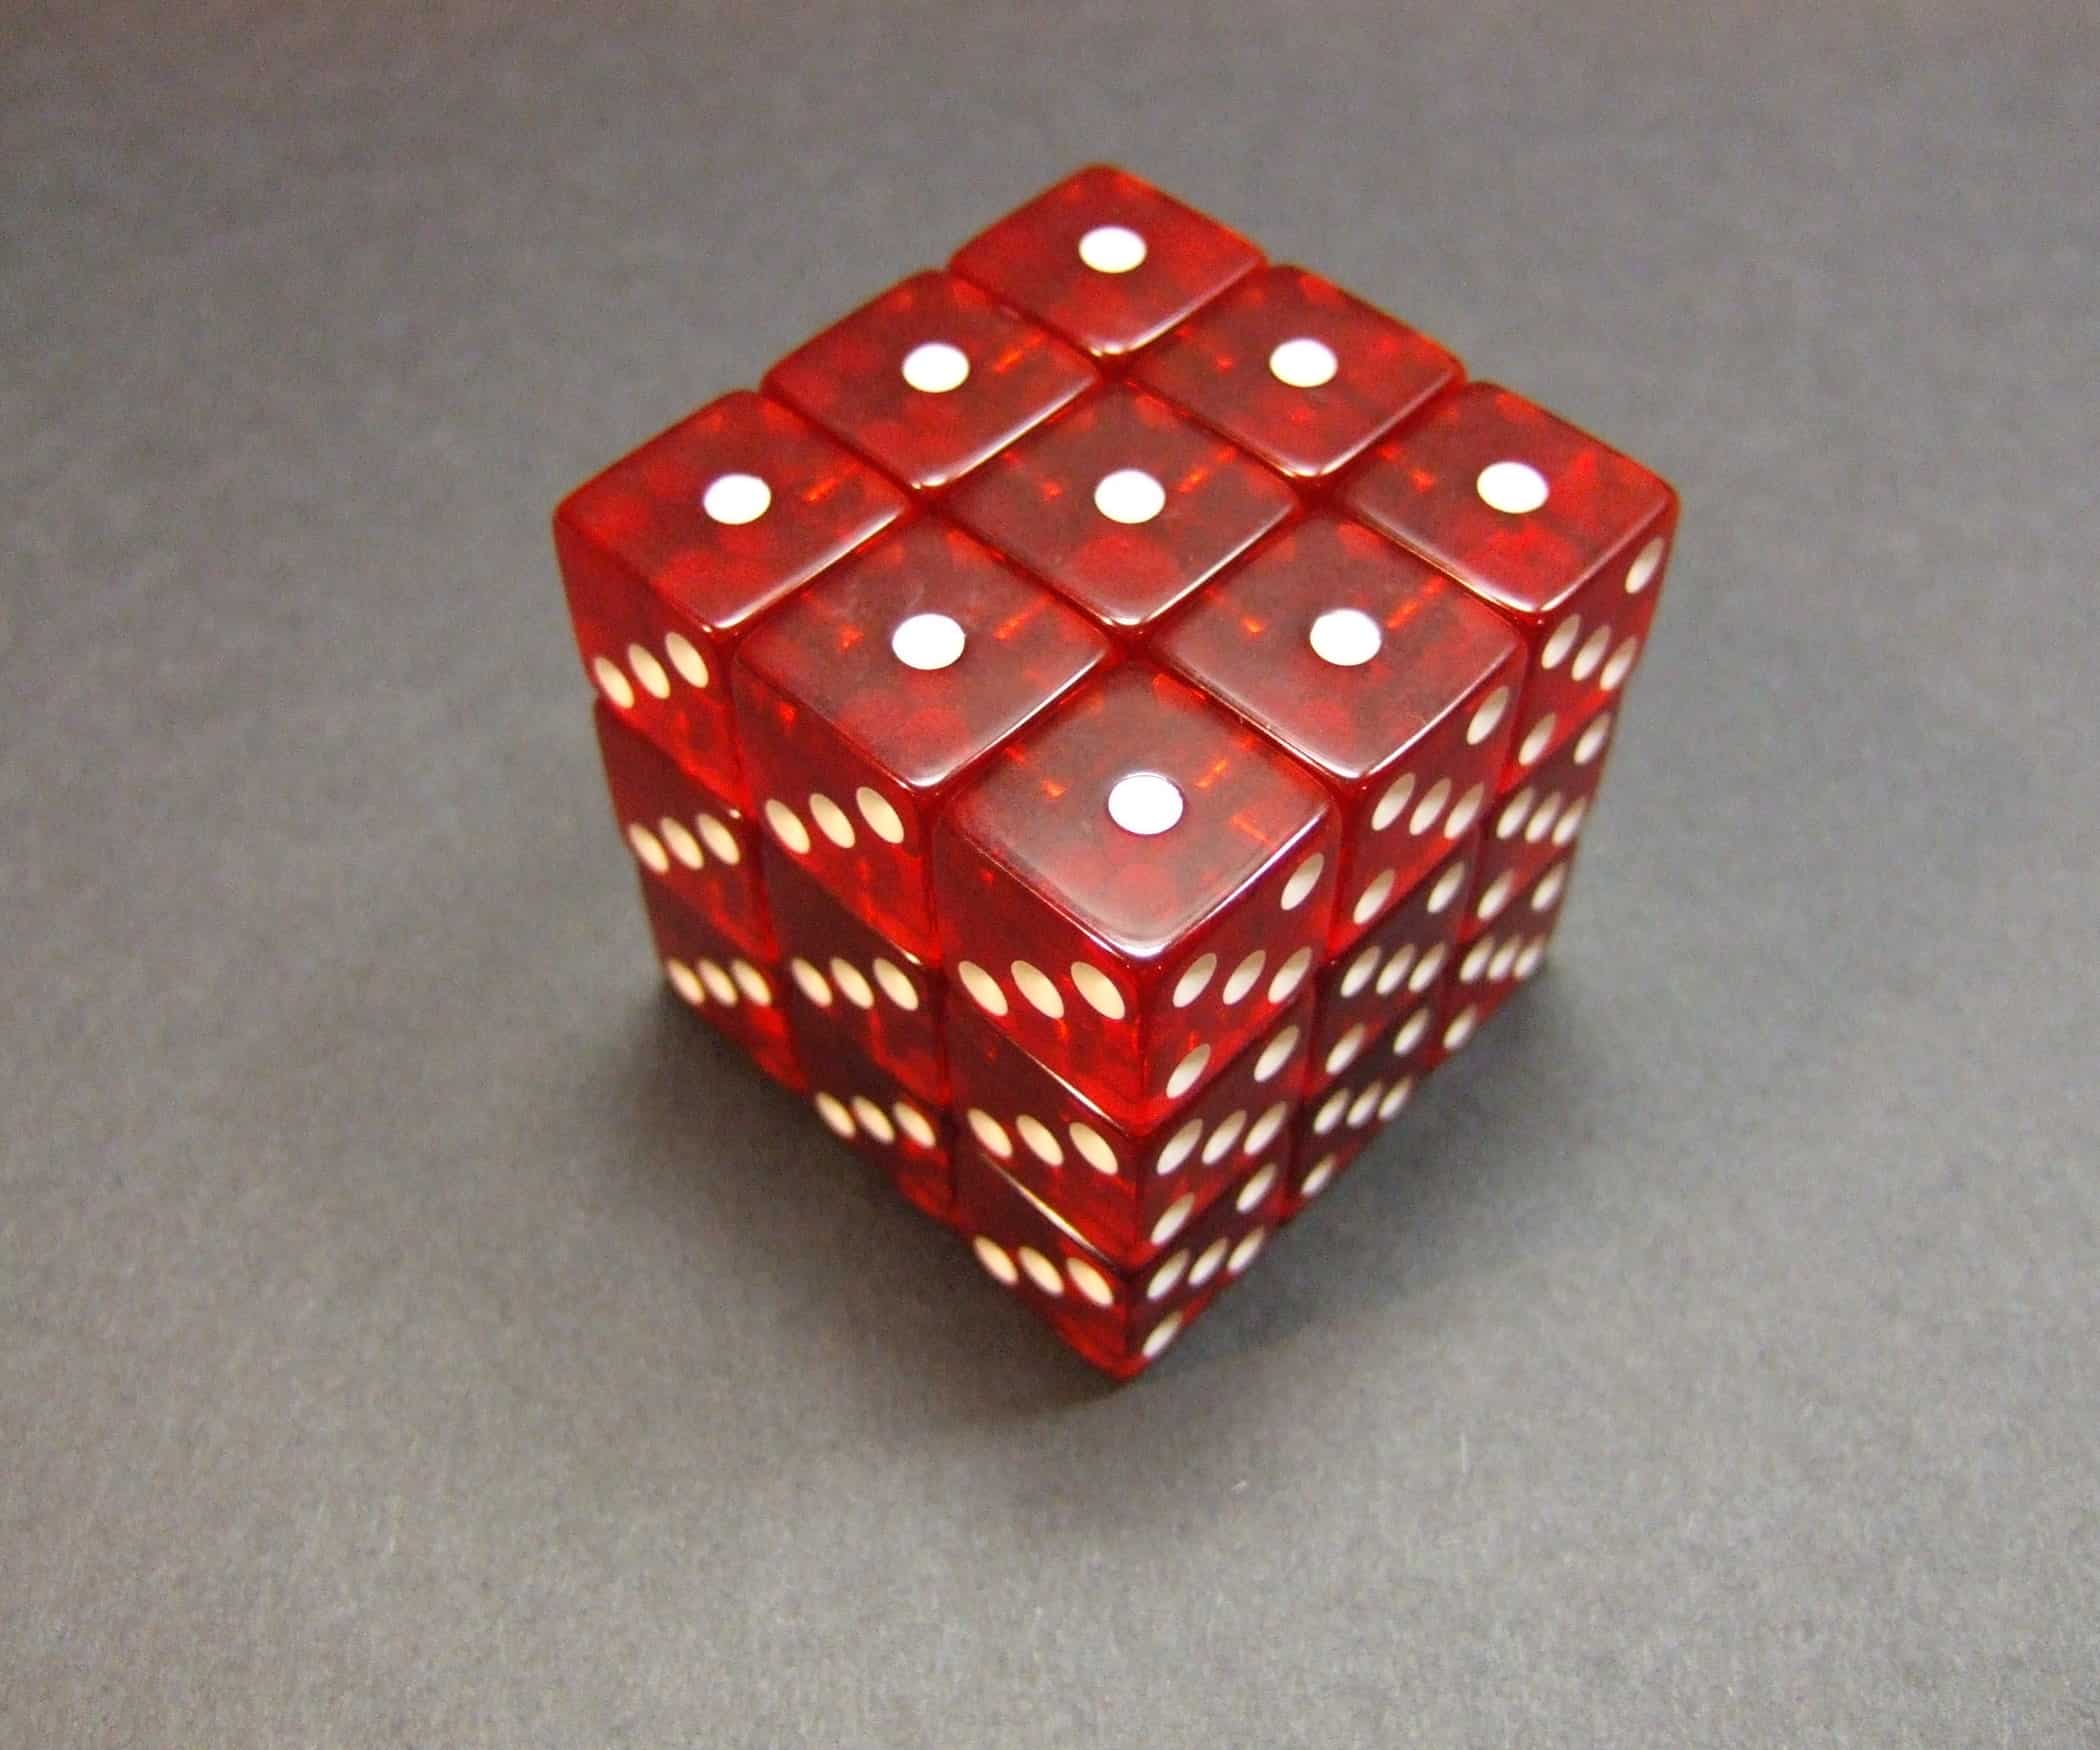 Magnetic dice rubik's cube